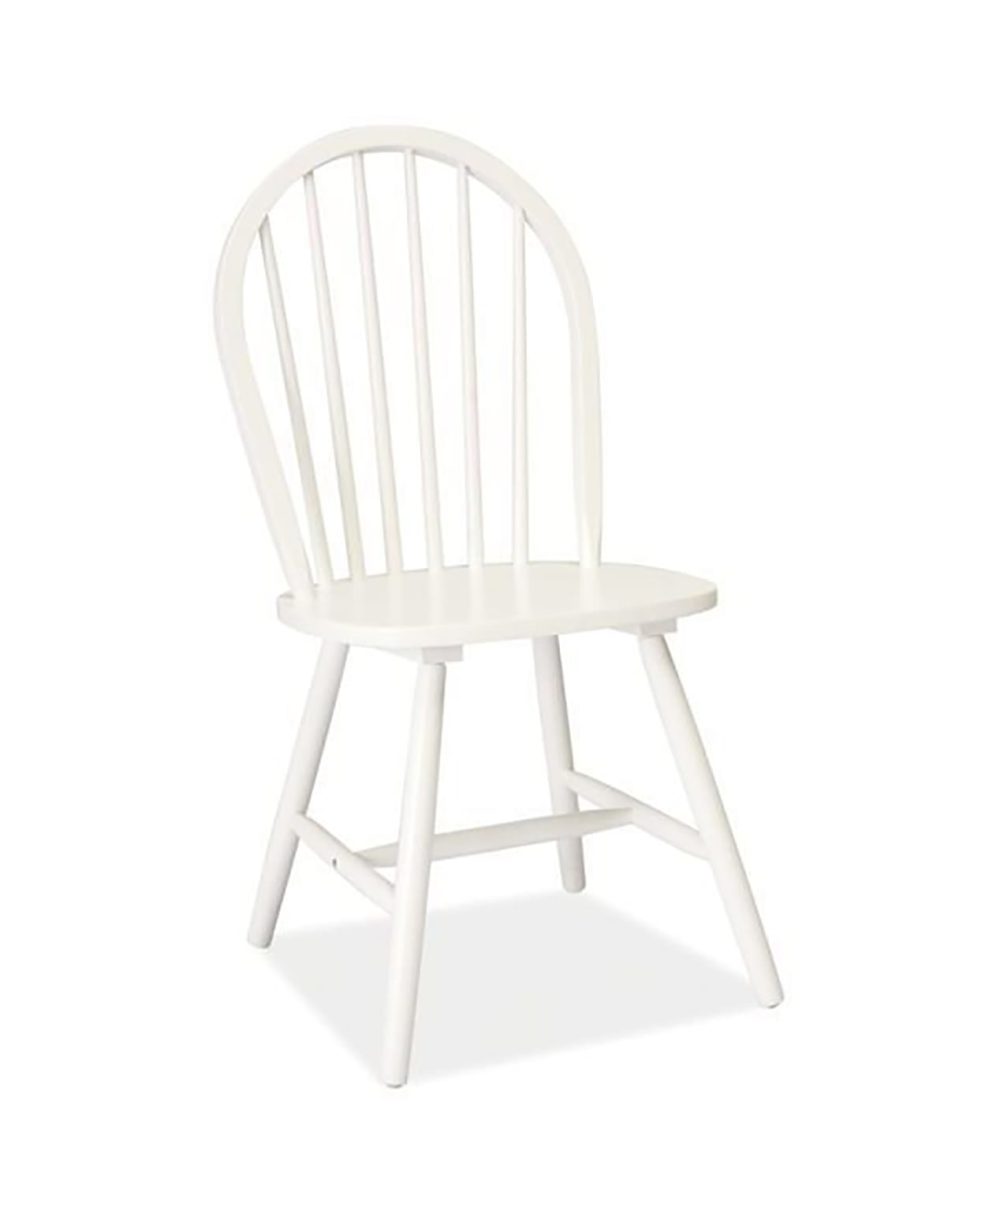 douglas-chair-white-profile.jpg